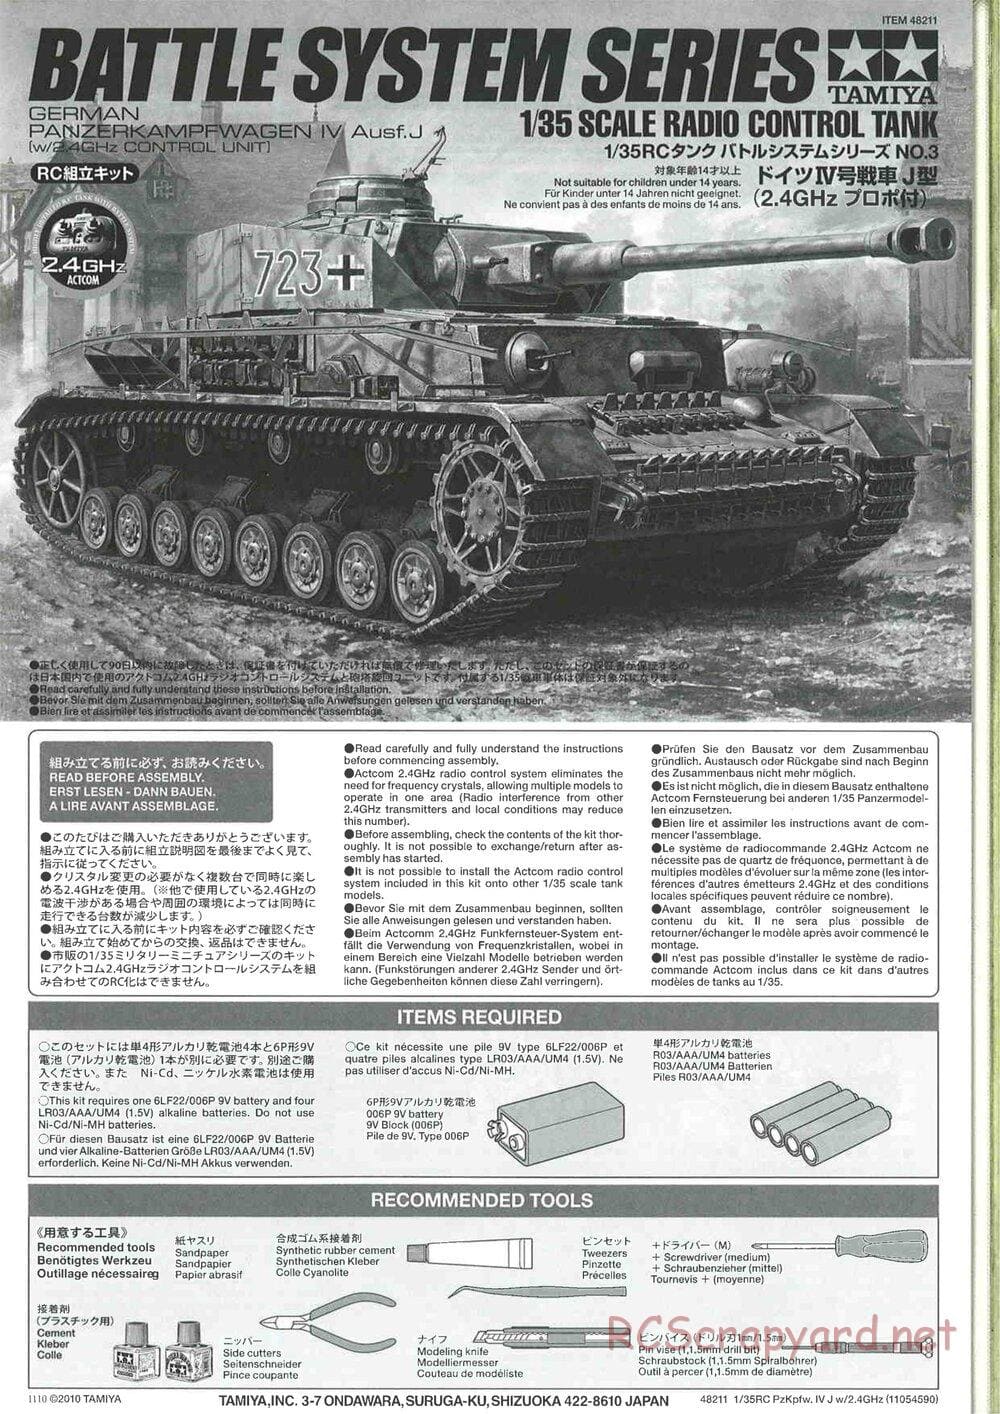 Tamiya - German Panzerkampfwagen IV Ausf.J - 1/35 Scale Chassis - Manual - Page 1